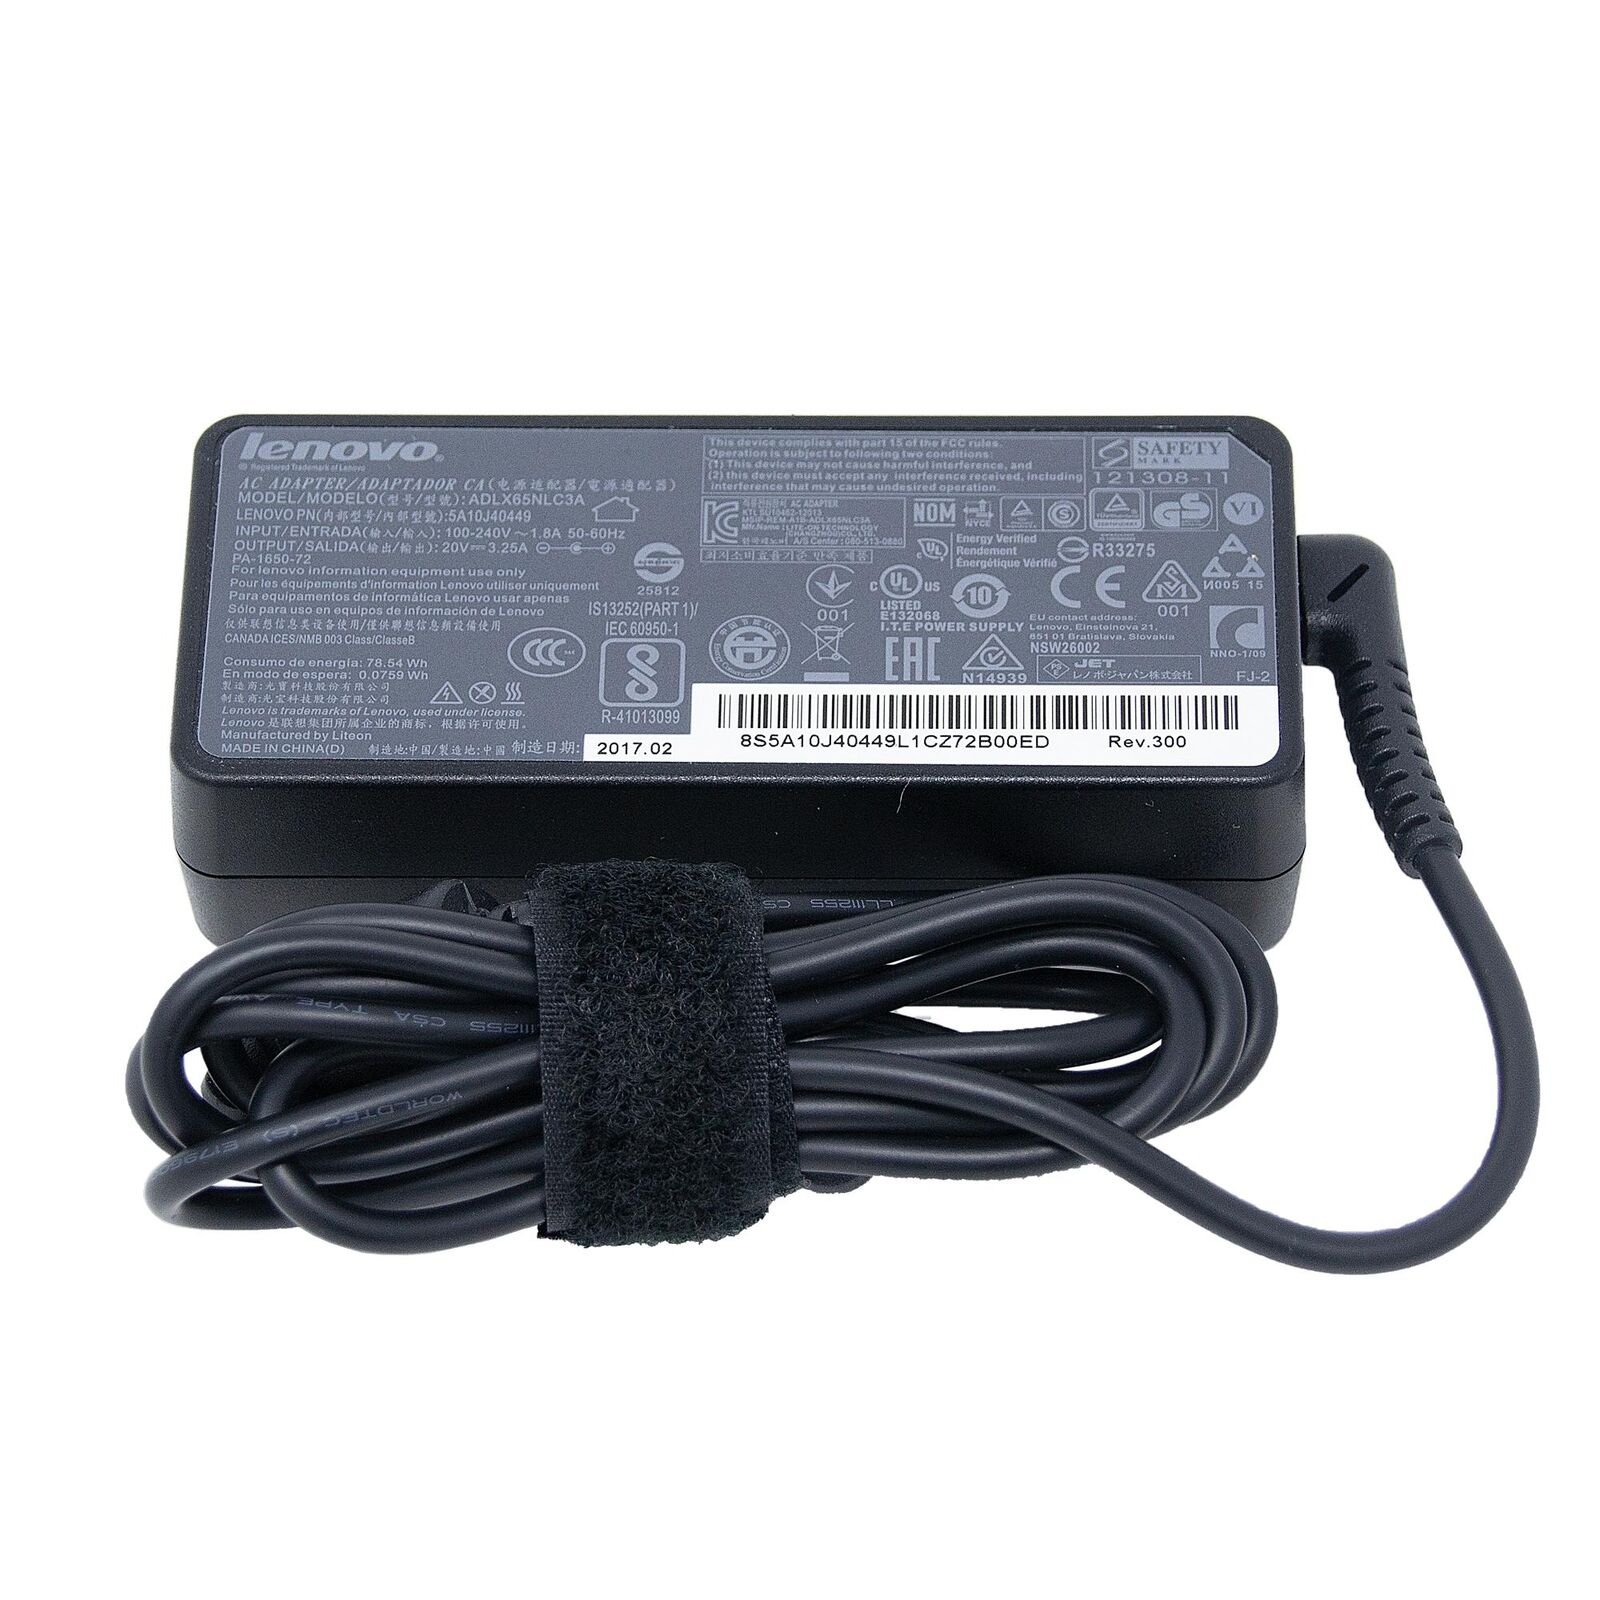 LENOVO IdeaPad 500 series Genuine Original AC Adapter Power Supply